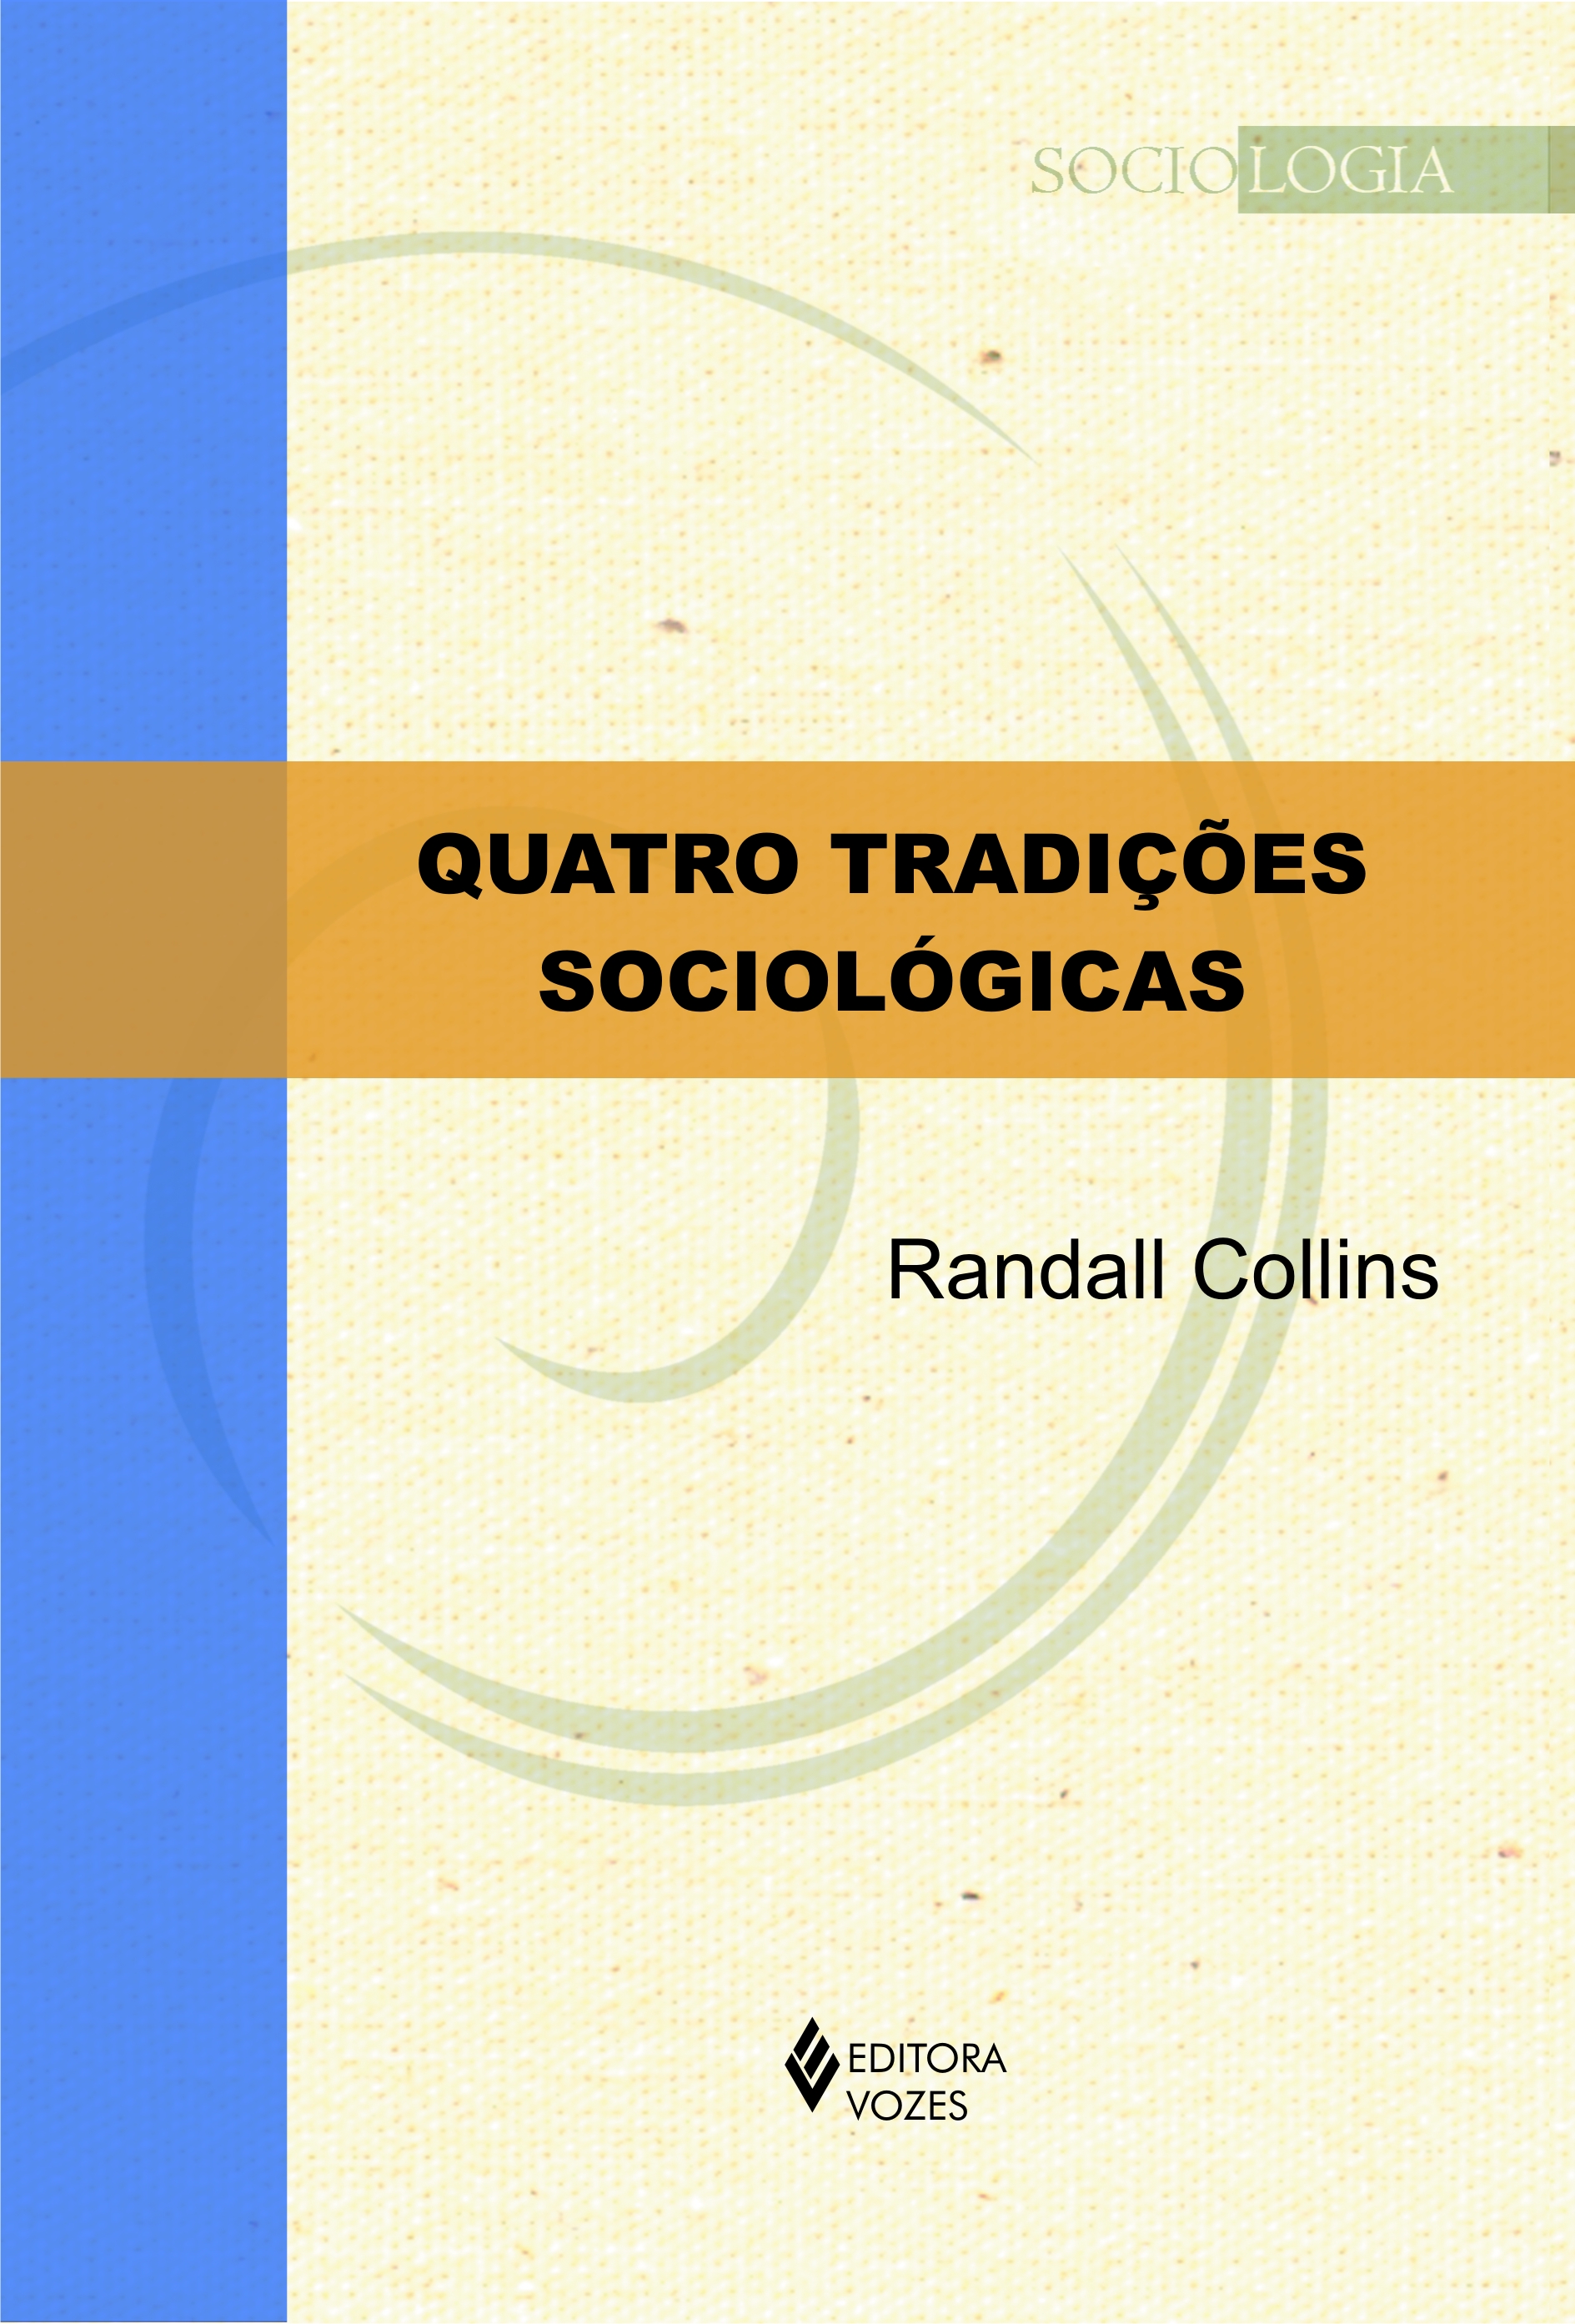 QUATRO TRADICOES SOCIOLOGICAS